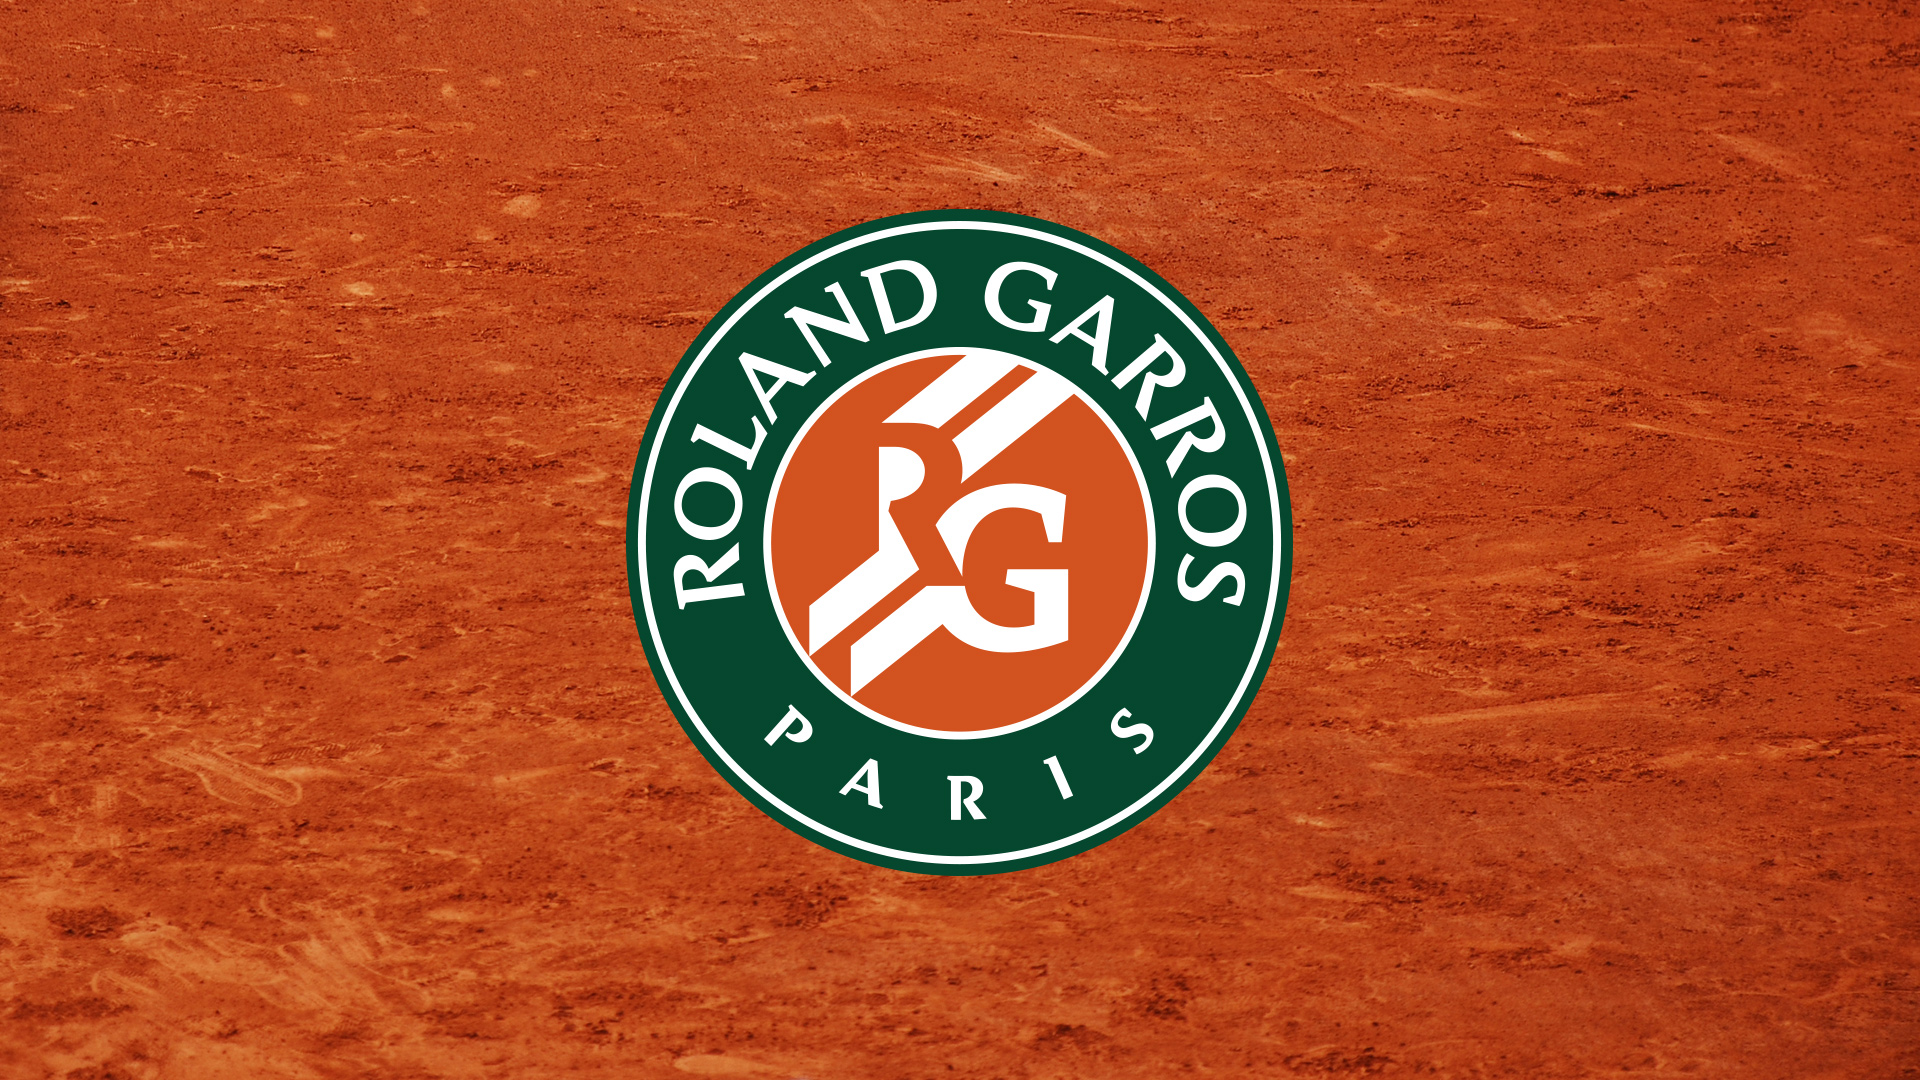 Sortie Roland Garros 2016